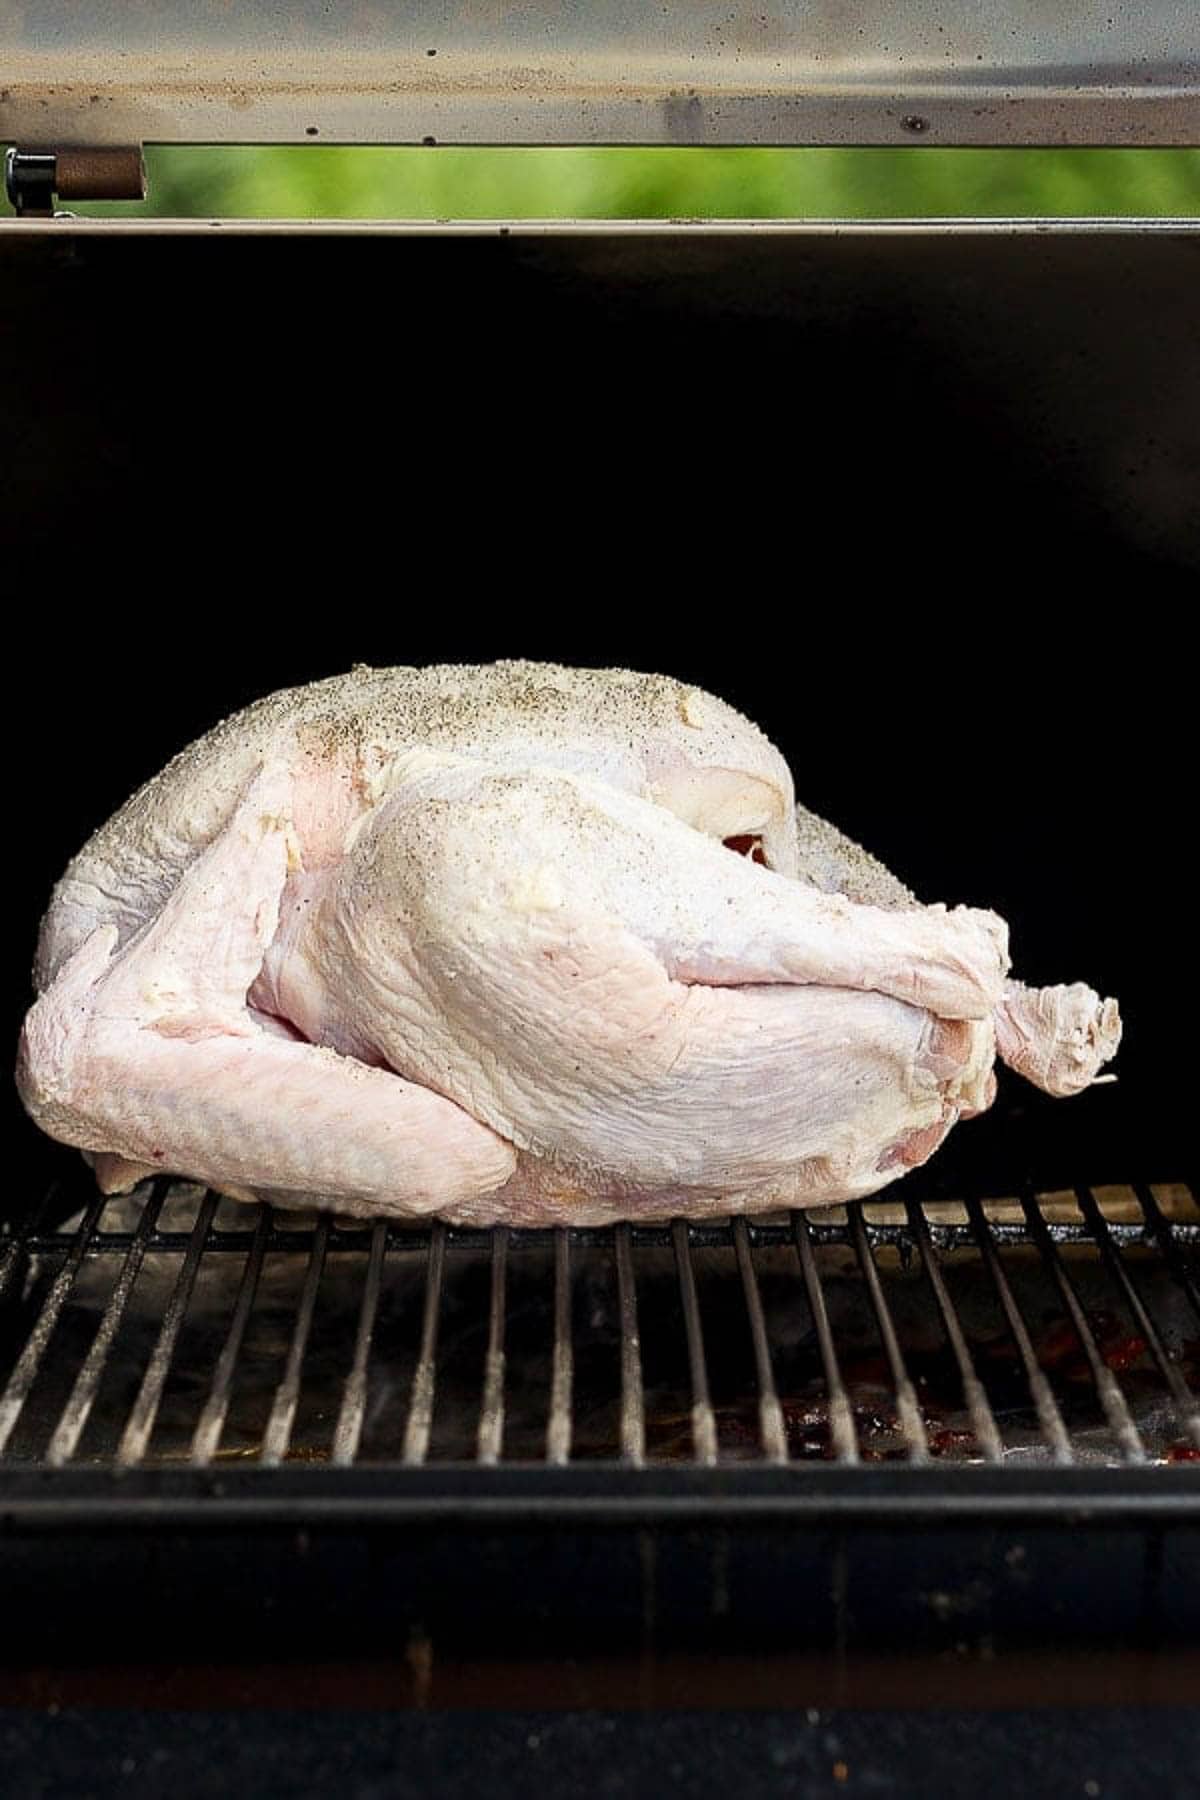 A whole turkey sitting on a Traeger smoker.